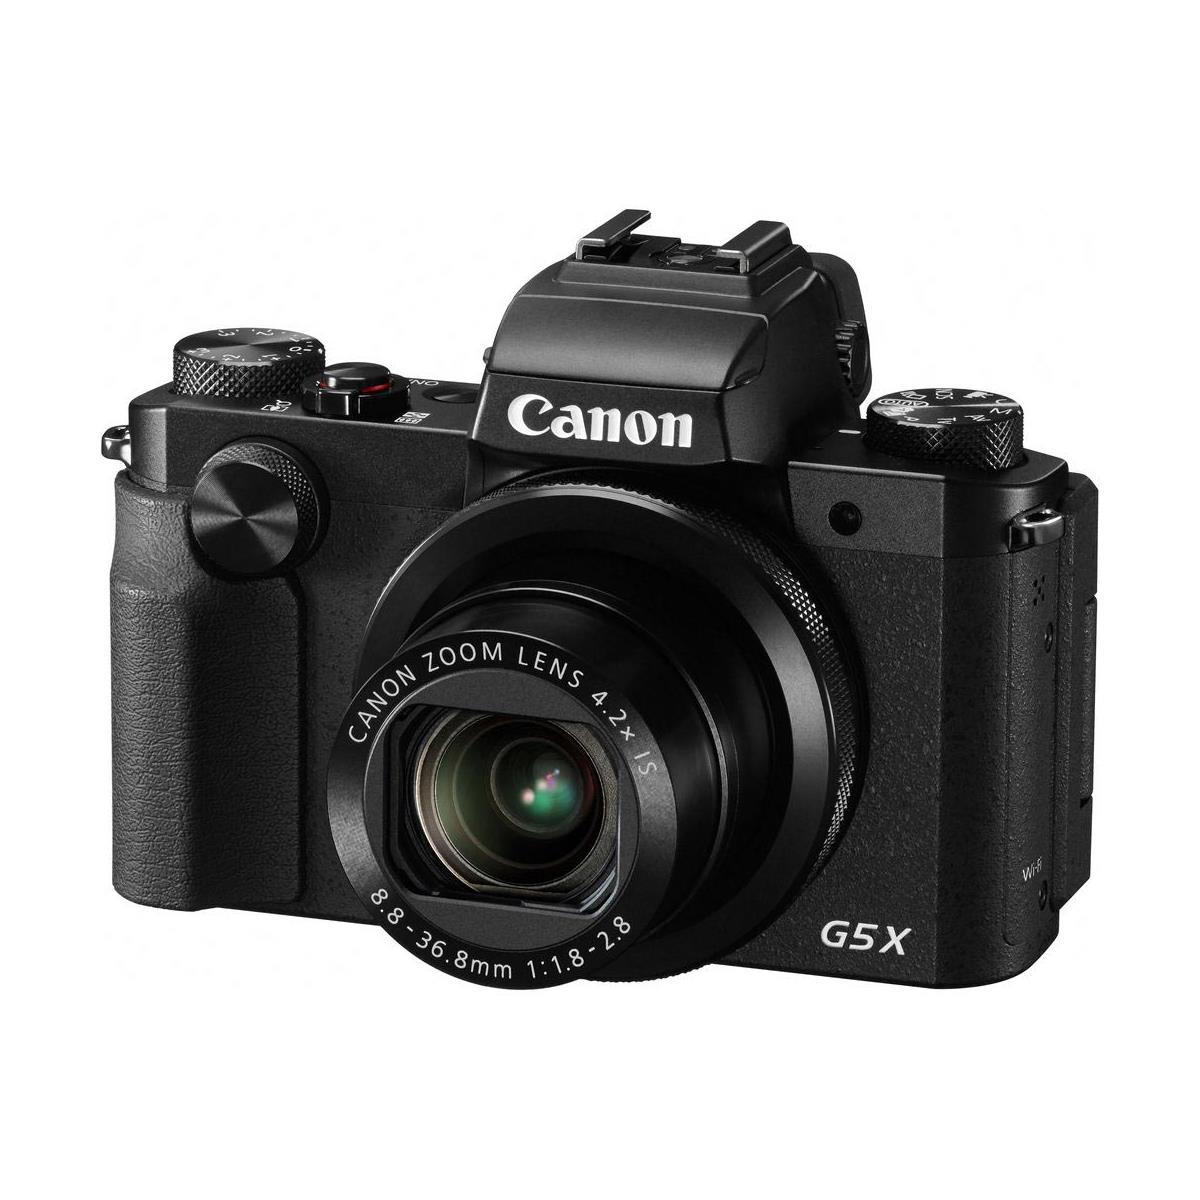 Canon PowerShot G5X Digital Camera